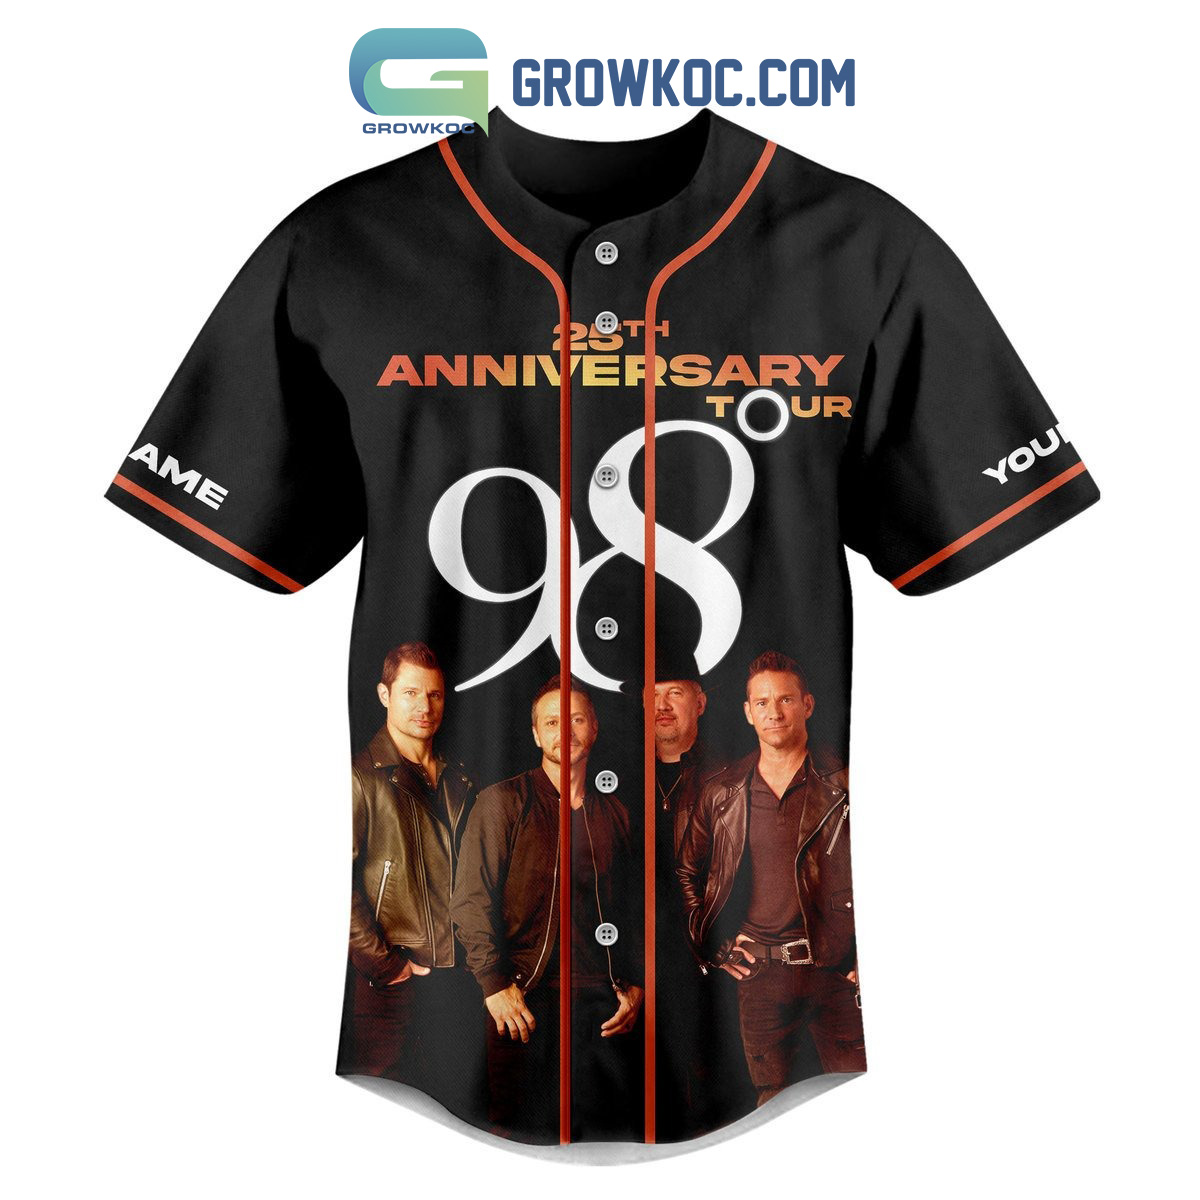 98 Degrees 25th Anniversary Tour Personalized Baseball Jersey - Growkoc